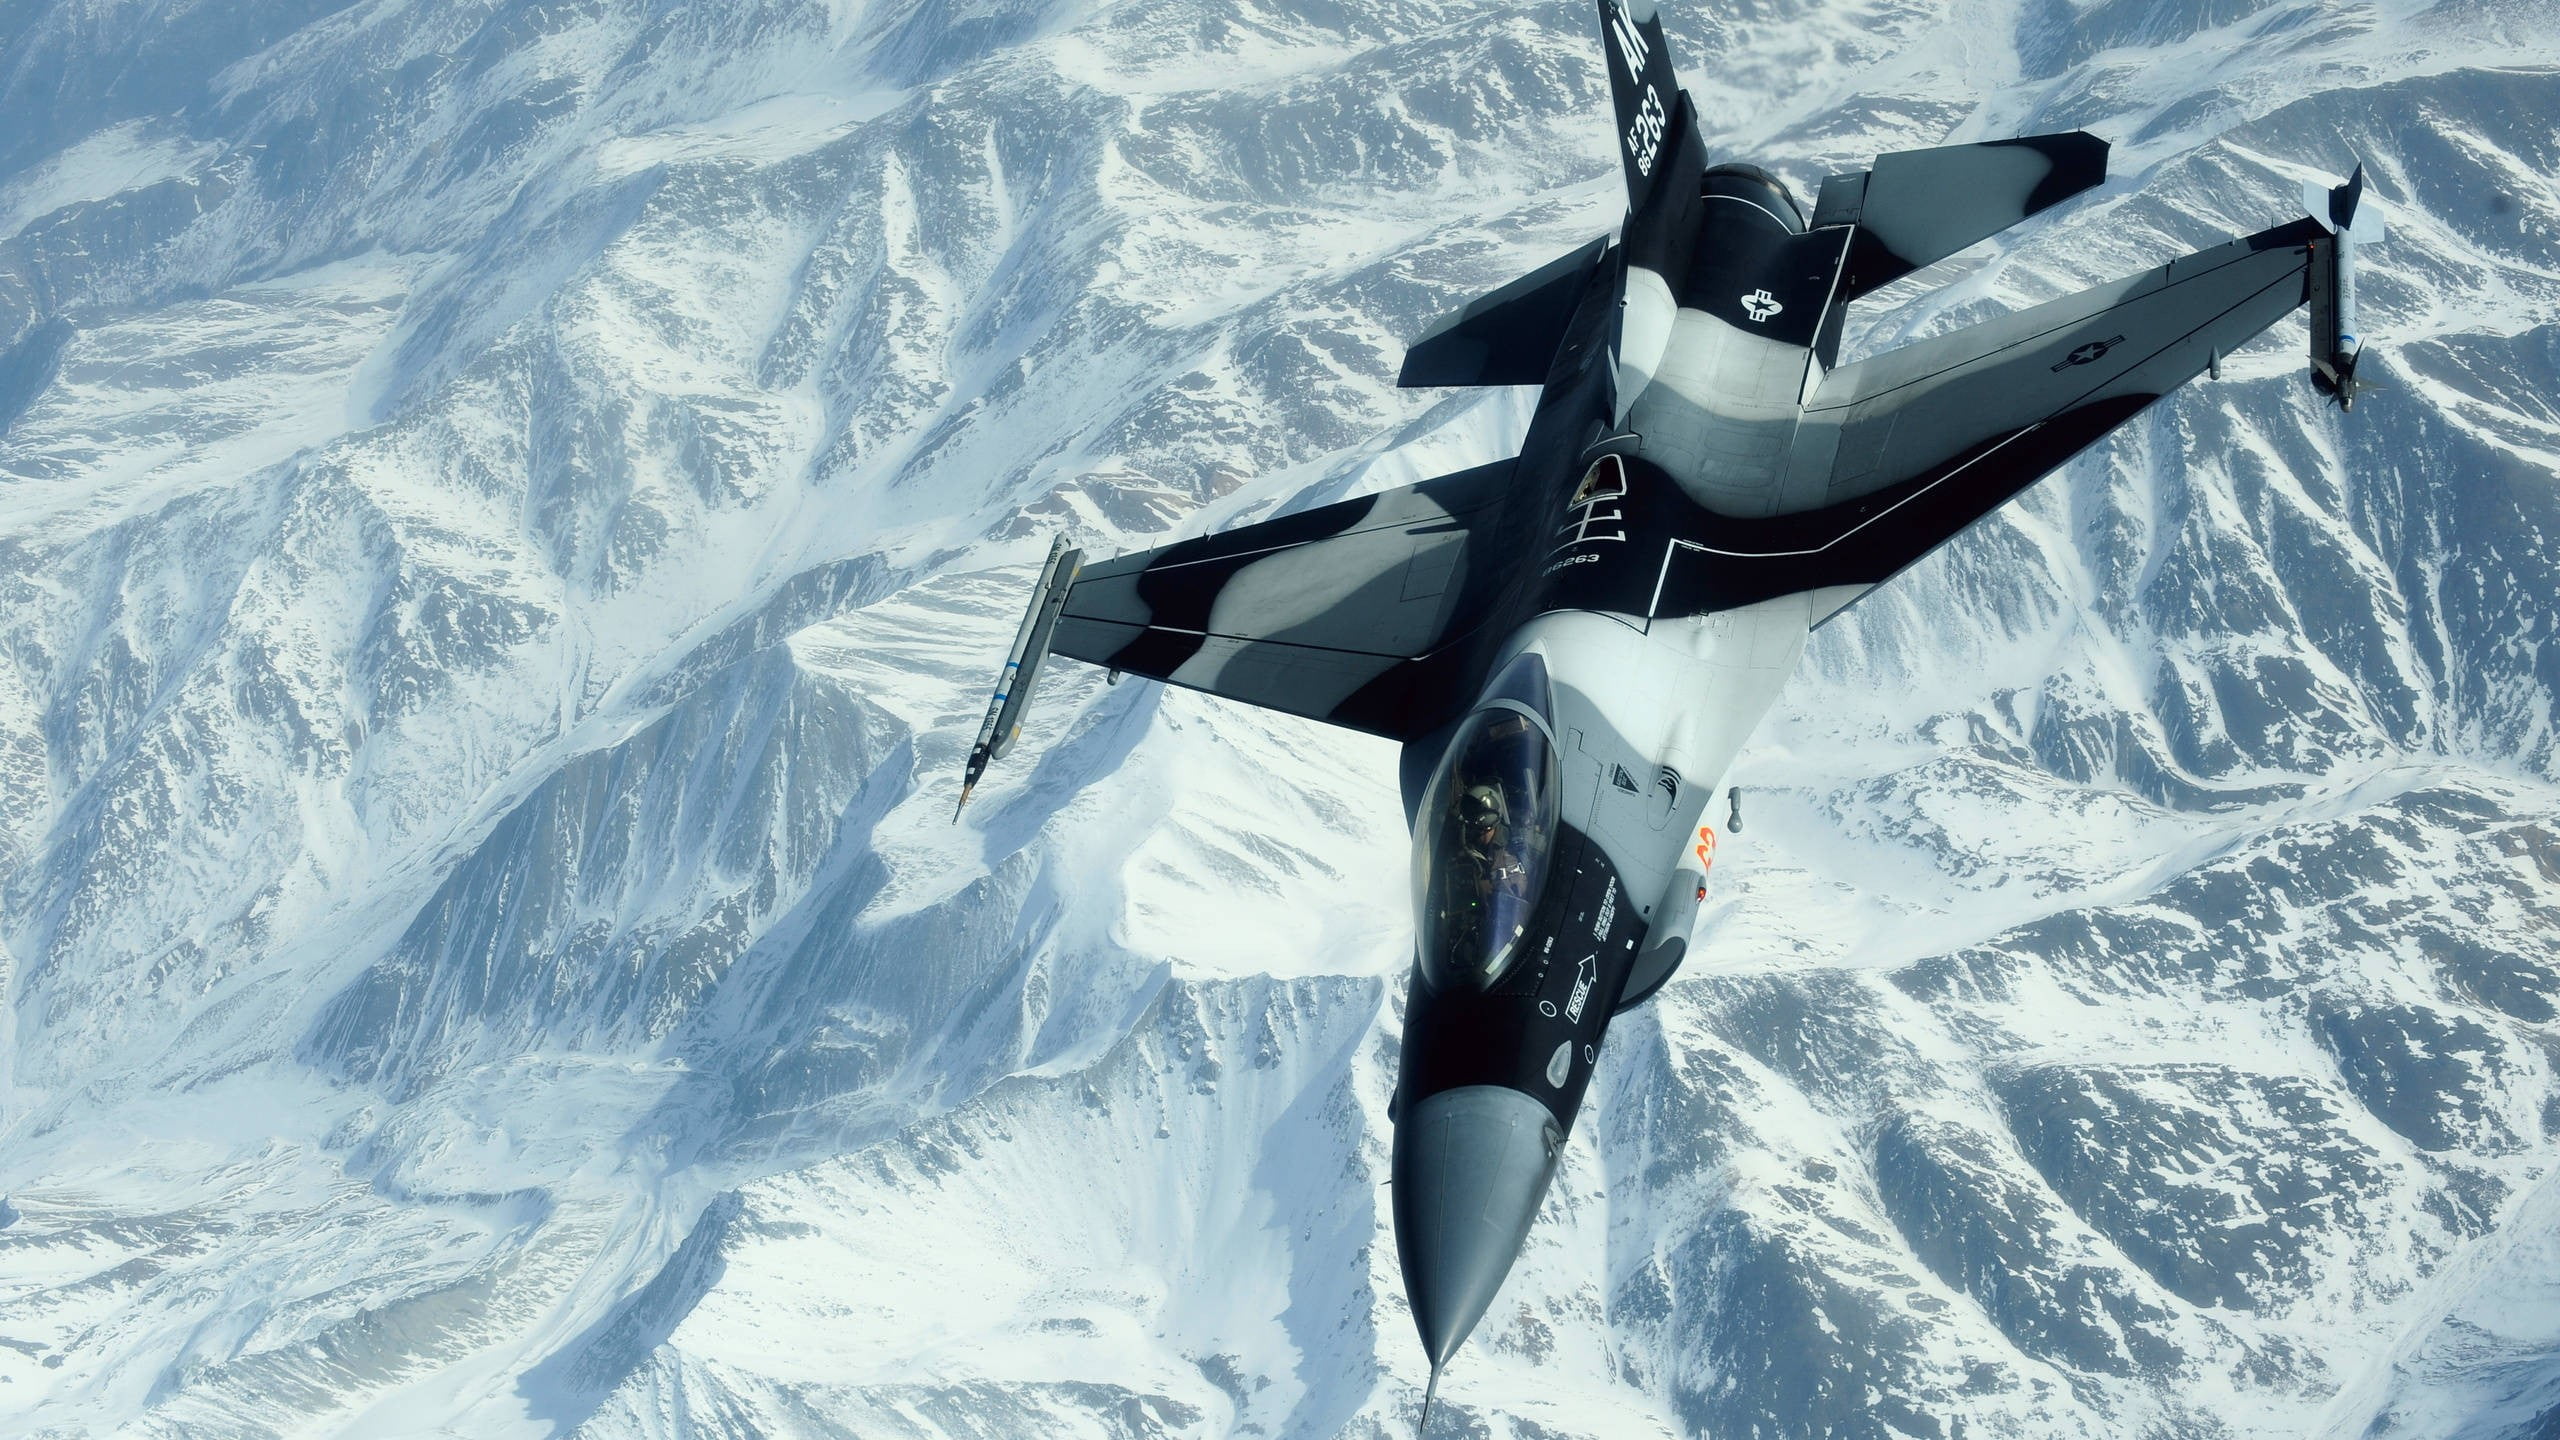 gray and white aircraft, General Dynamics F-16 Fighting Falcon, military aircraft, aircraft, vehicle